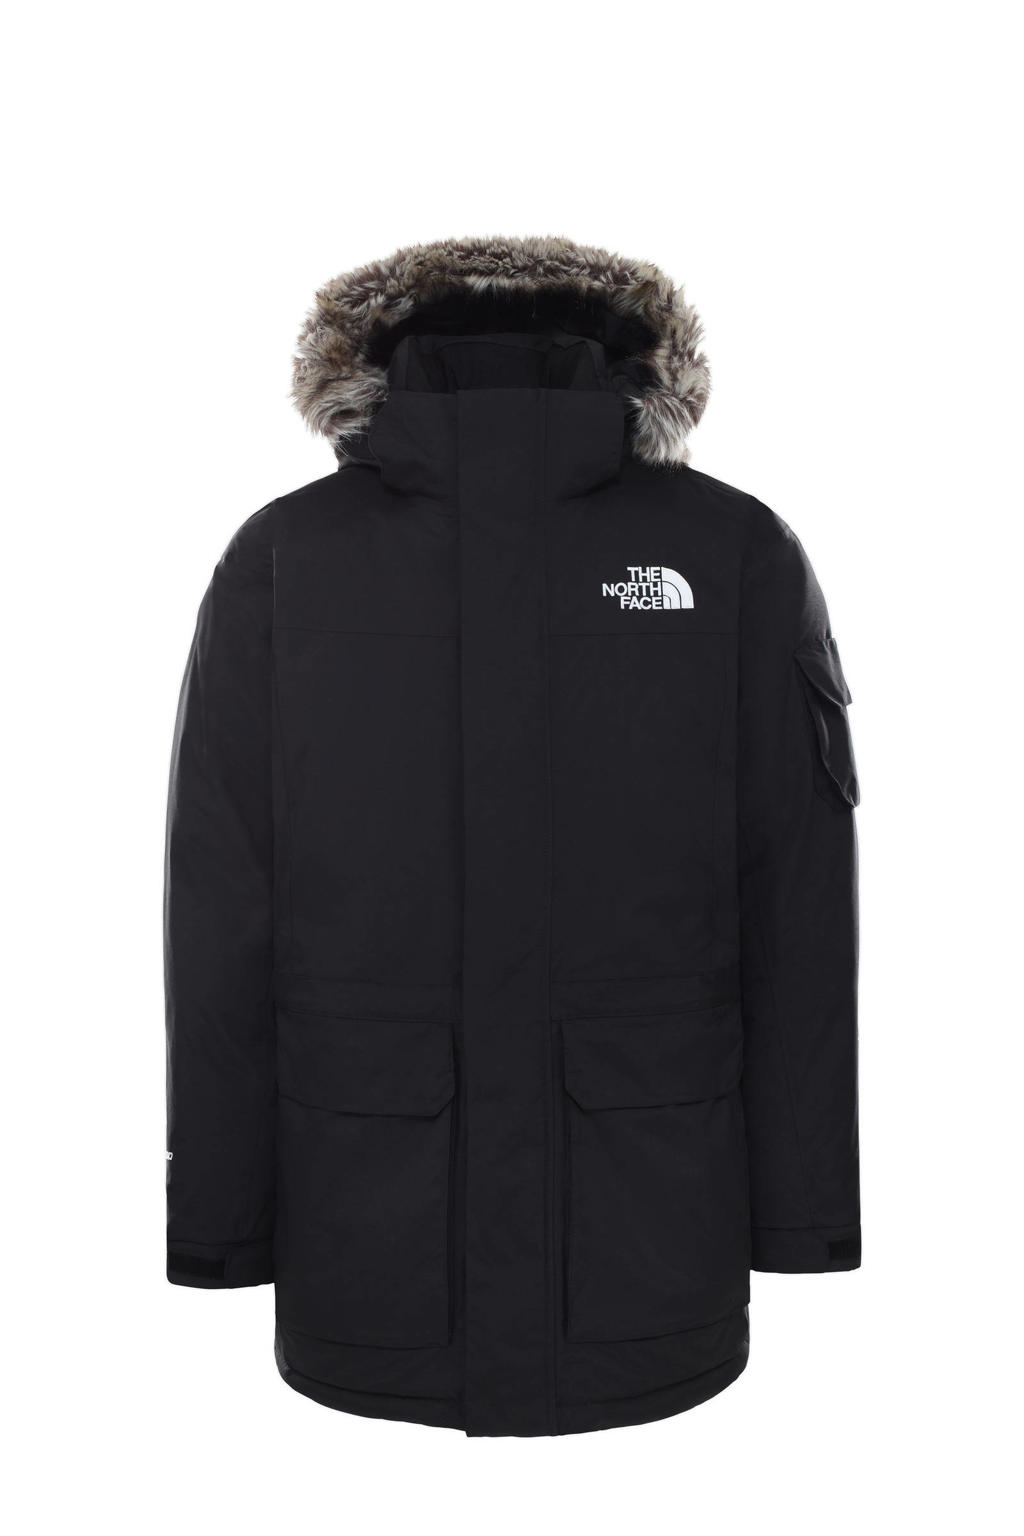 The North Face outdoor jas Mcmurdo zwart